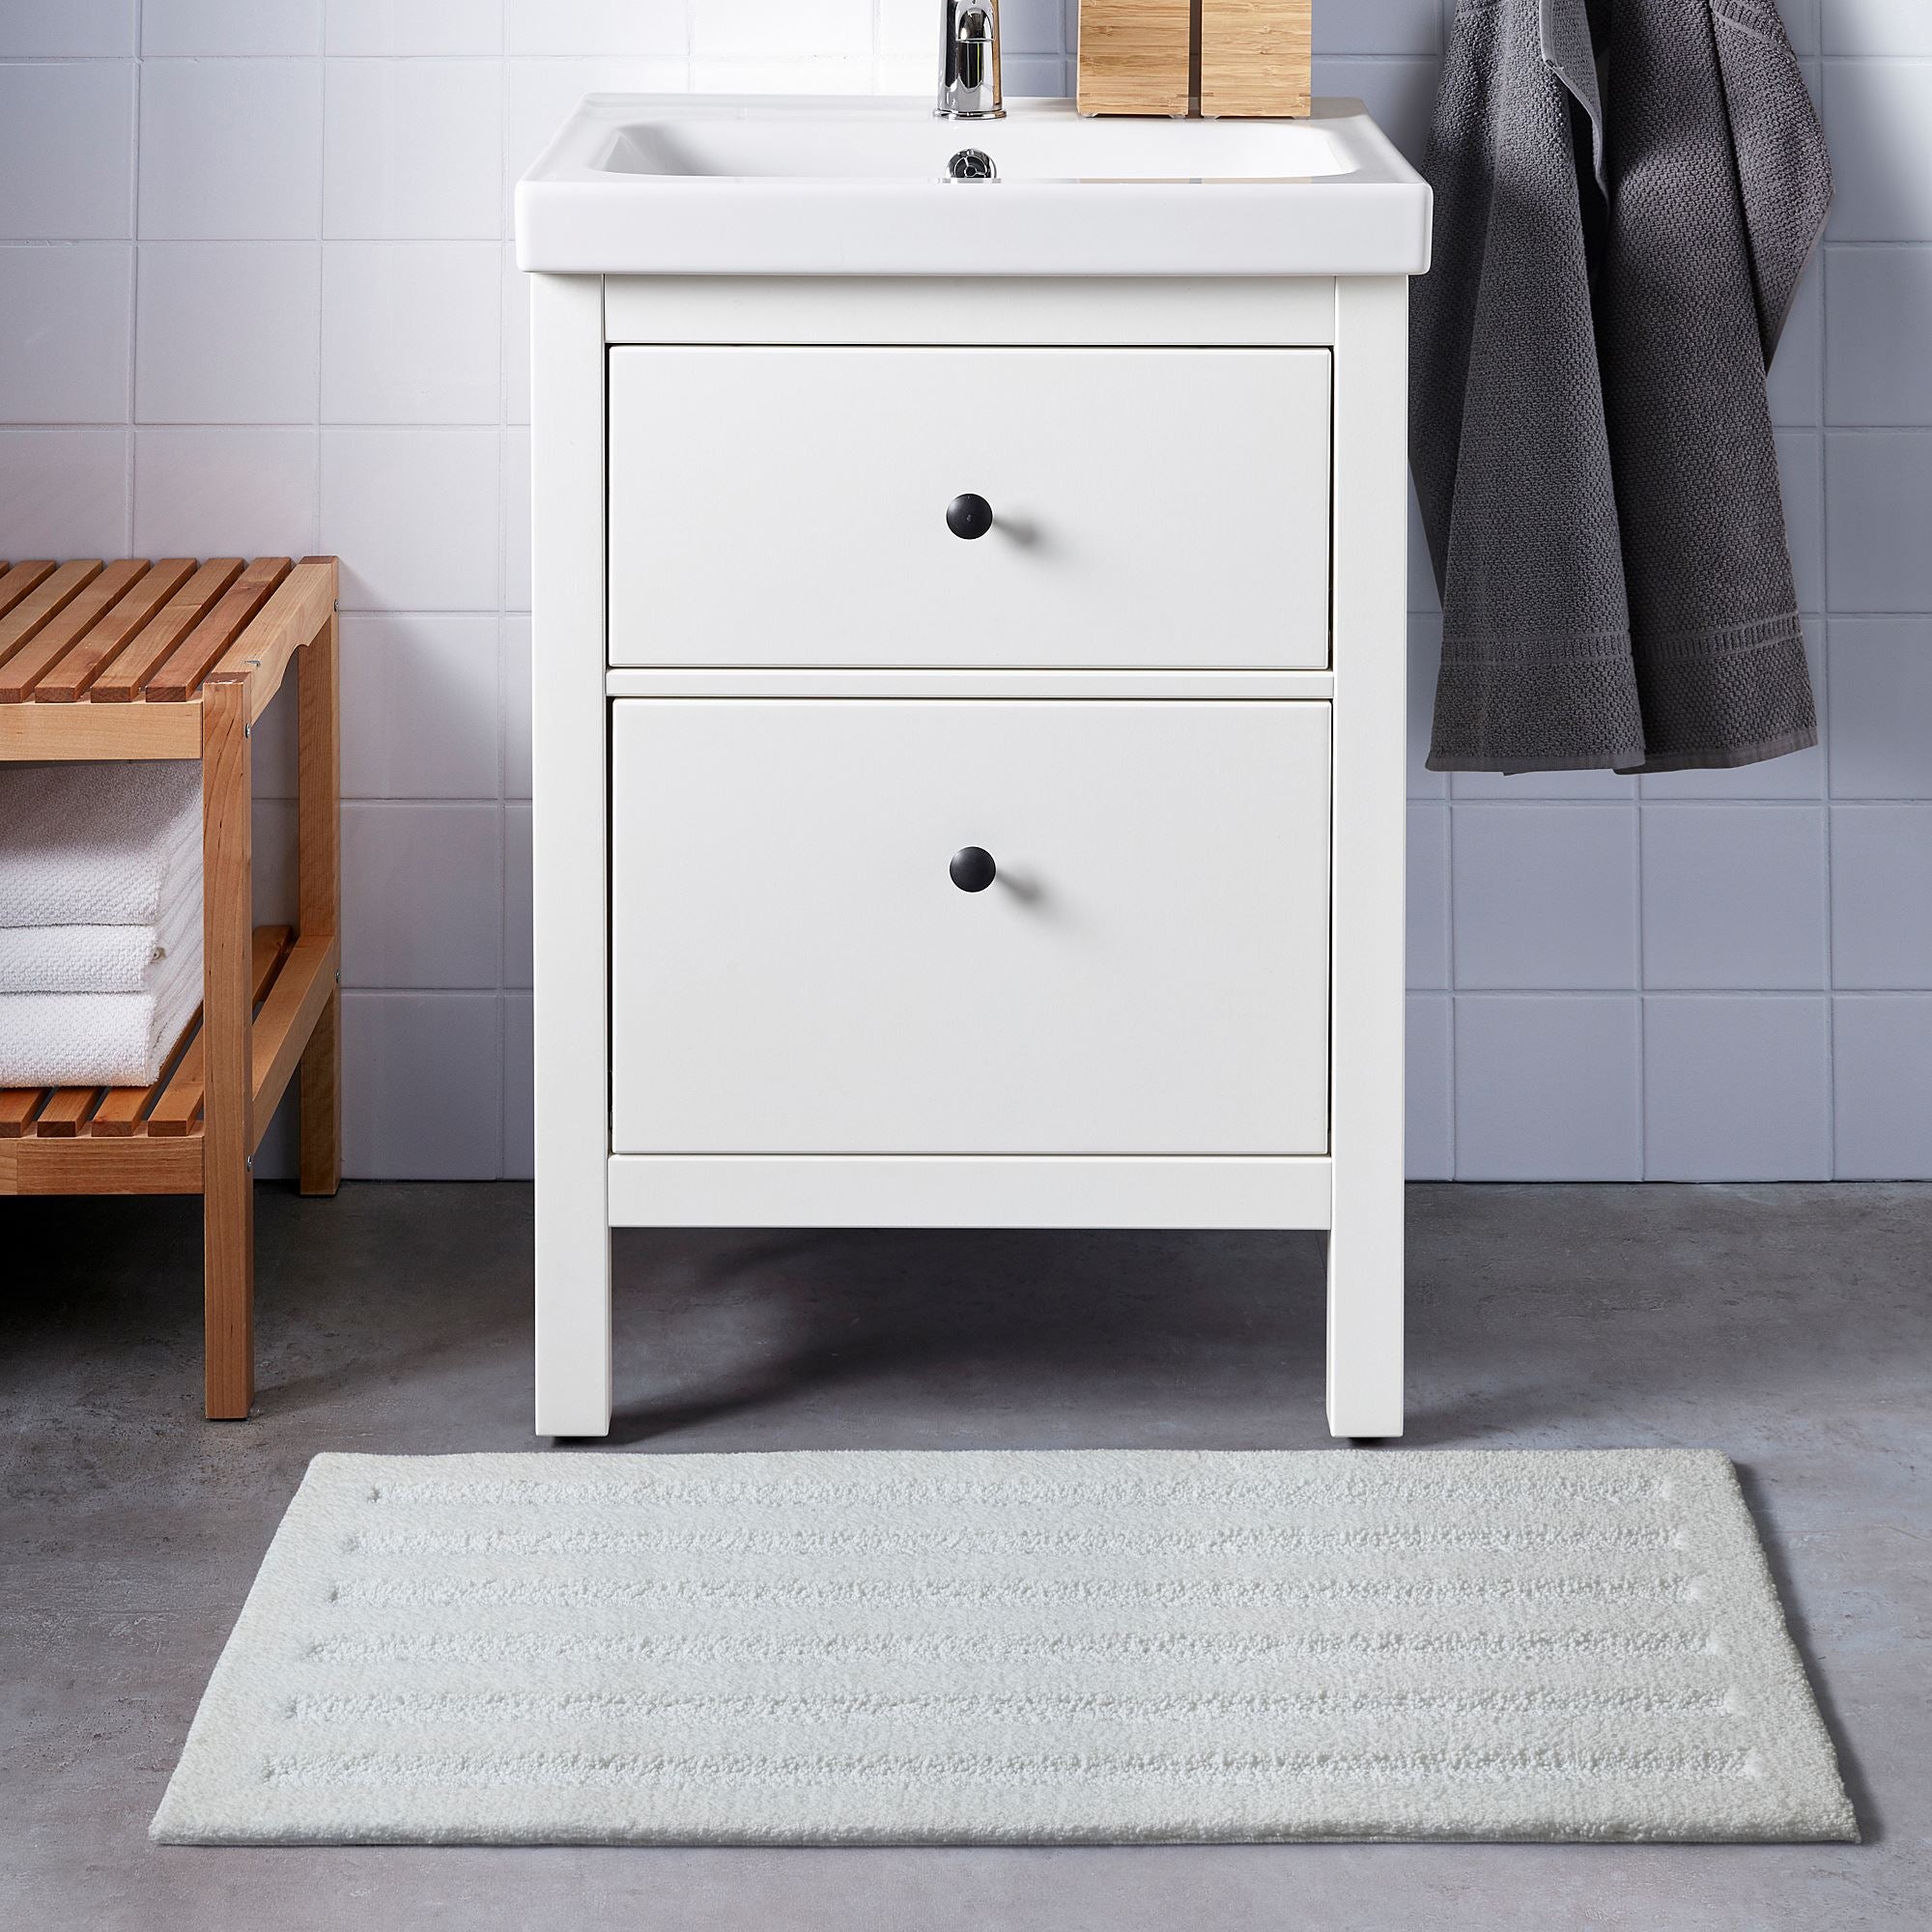 DOPPA Bathtub mat, light gray - IKEA